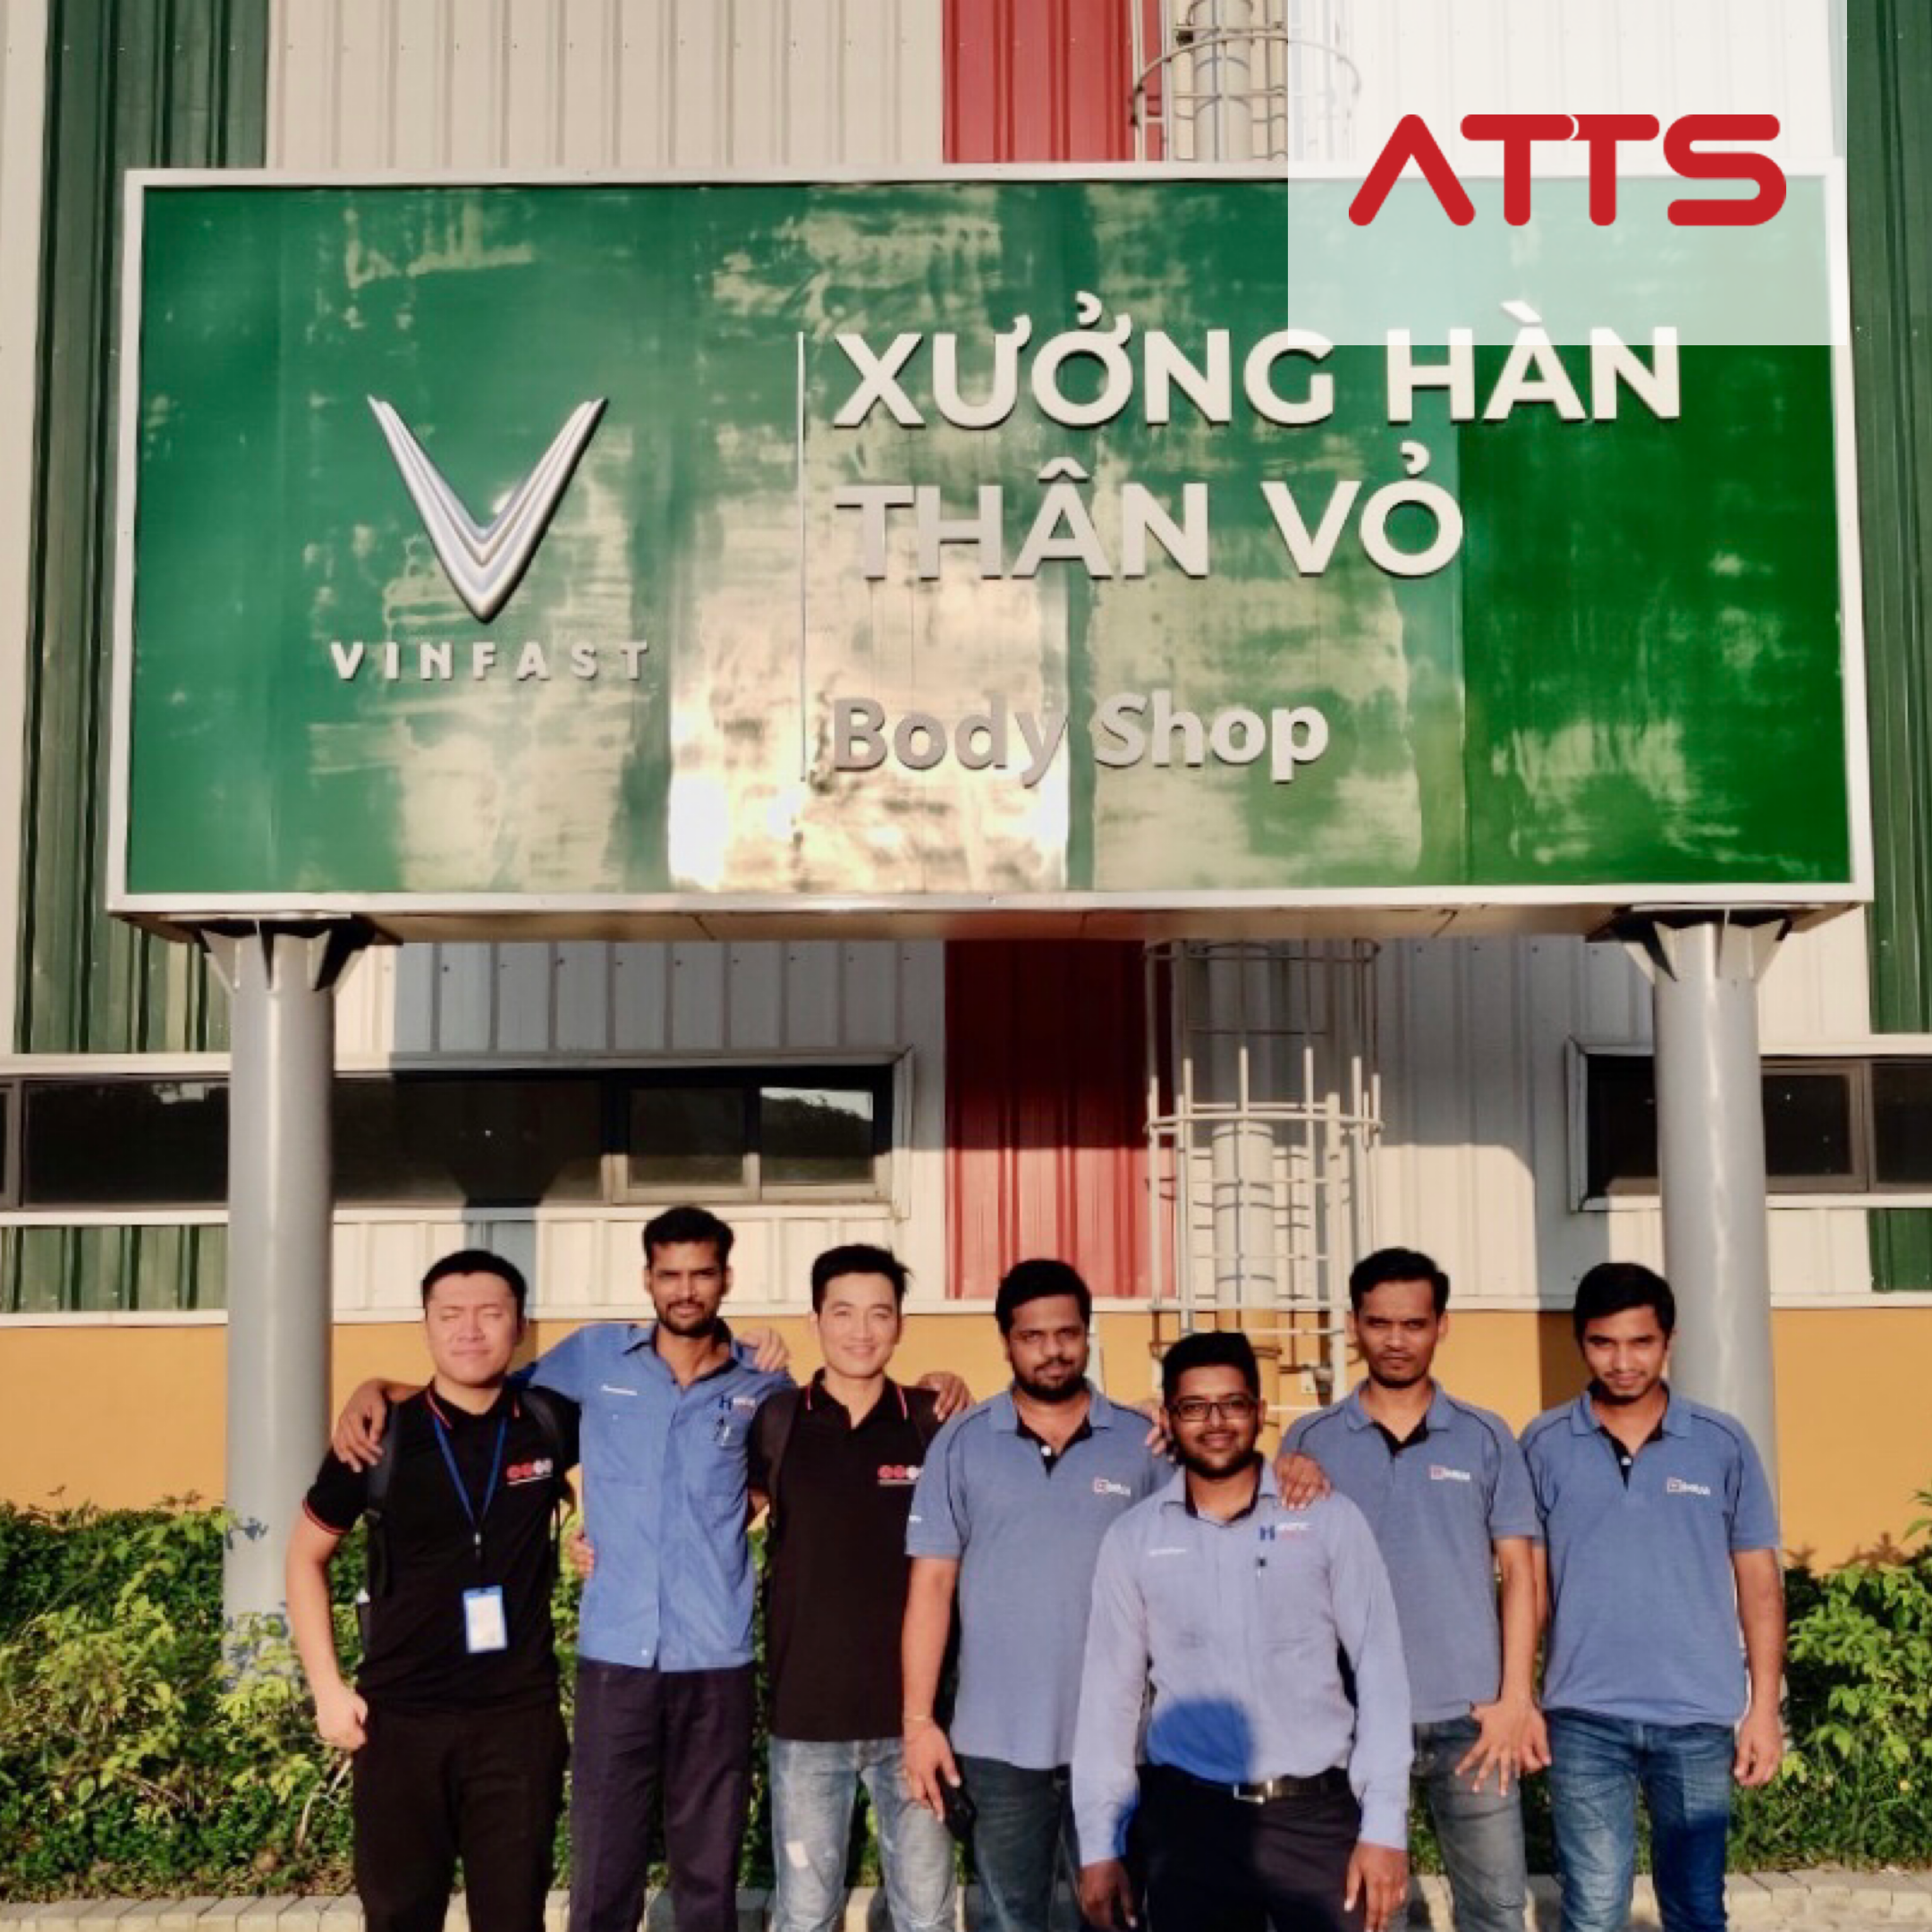 ATTS Vietnam’s (Autotech) engineers at VinFast’s Body Shop